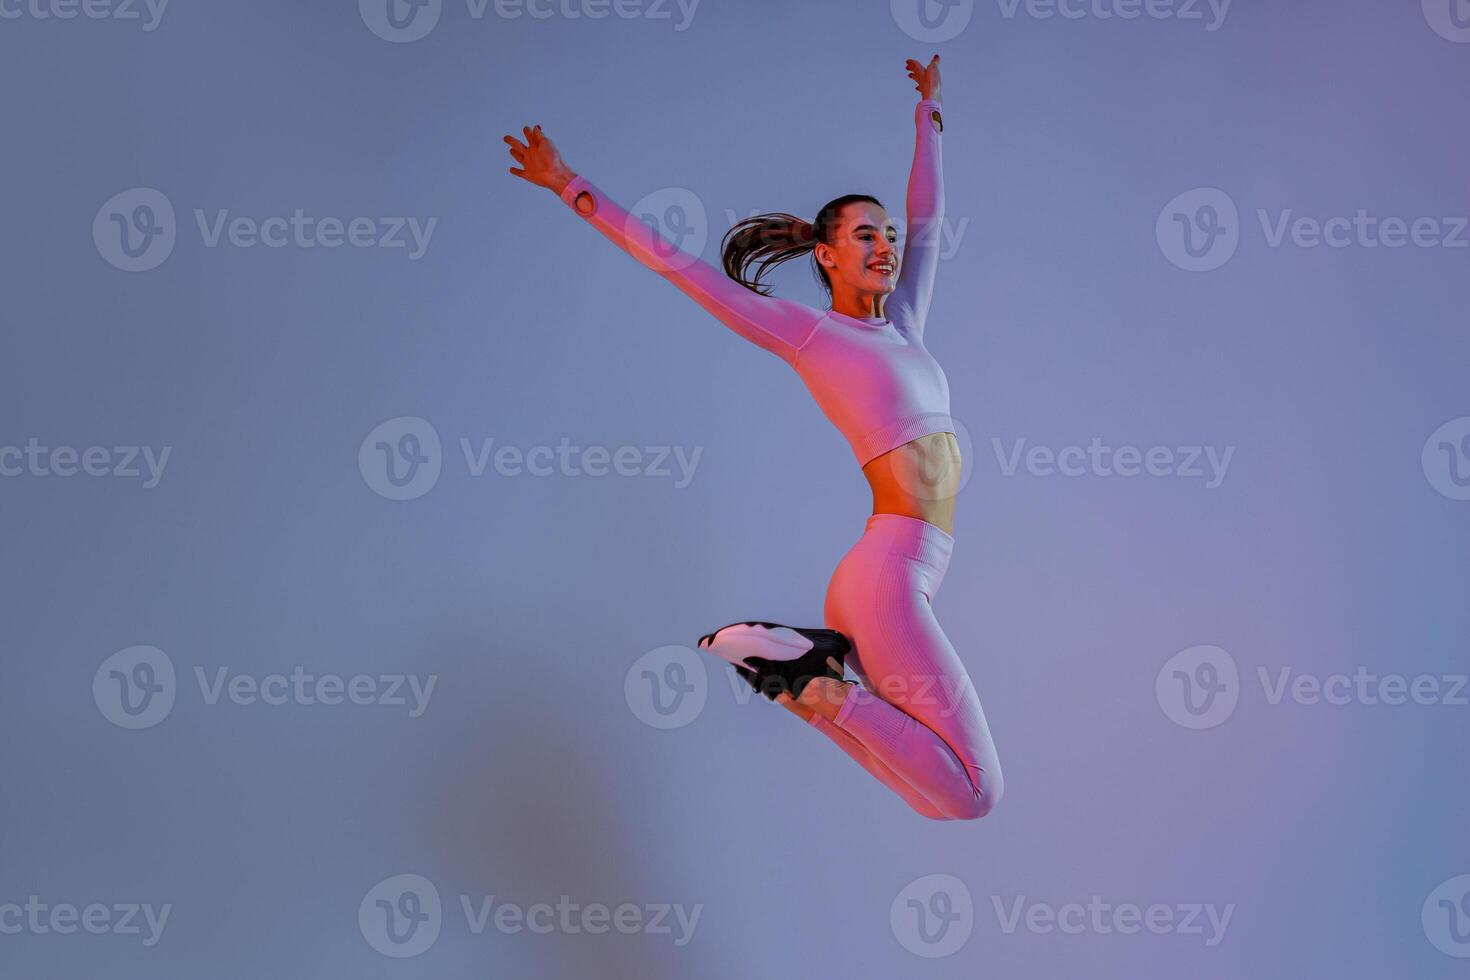 glimlachen sportief vrouw in sportkleding jumping Aan studio achtergrond. sport en gezond levensstijl foto